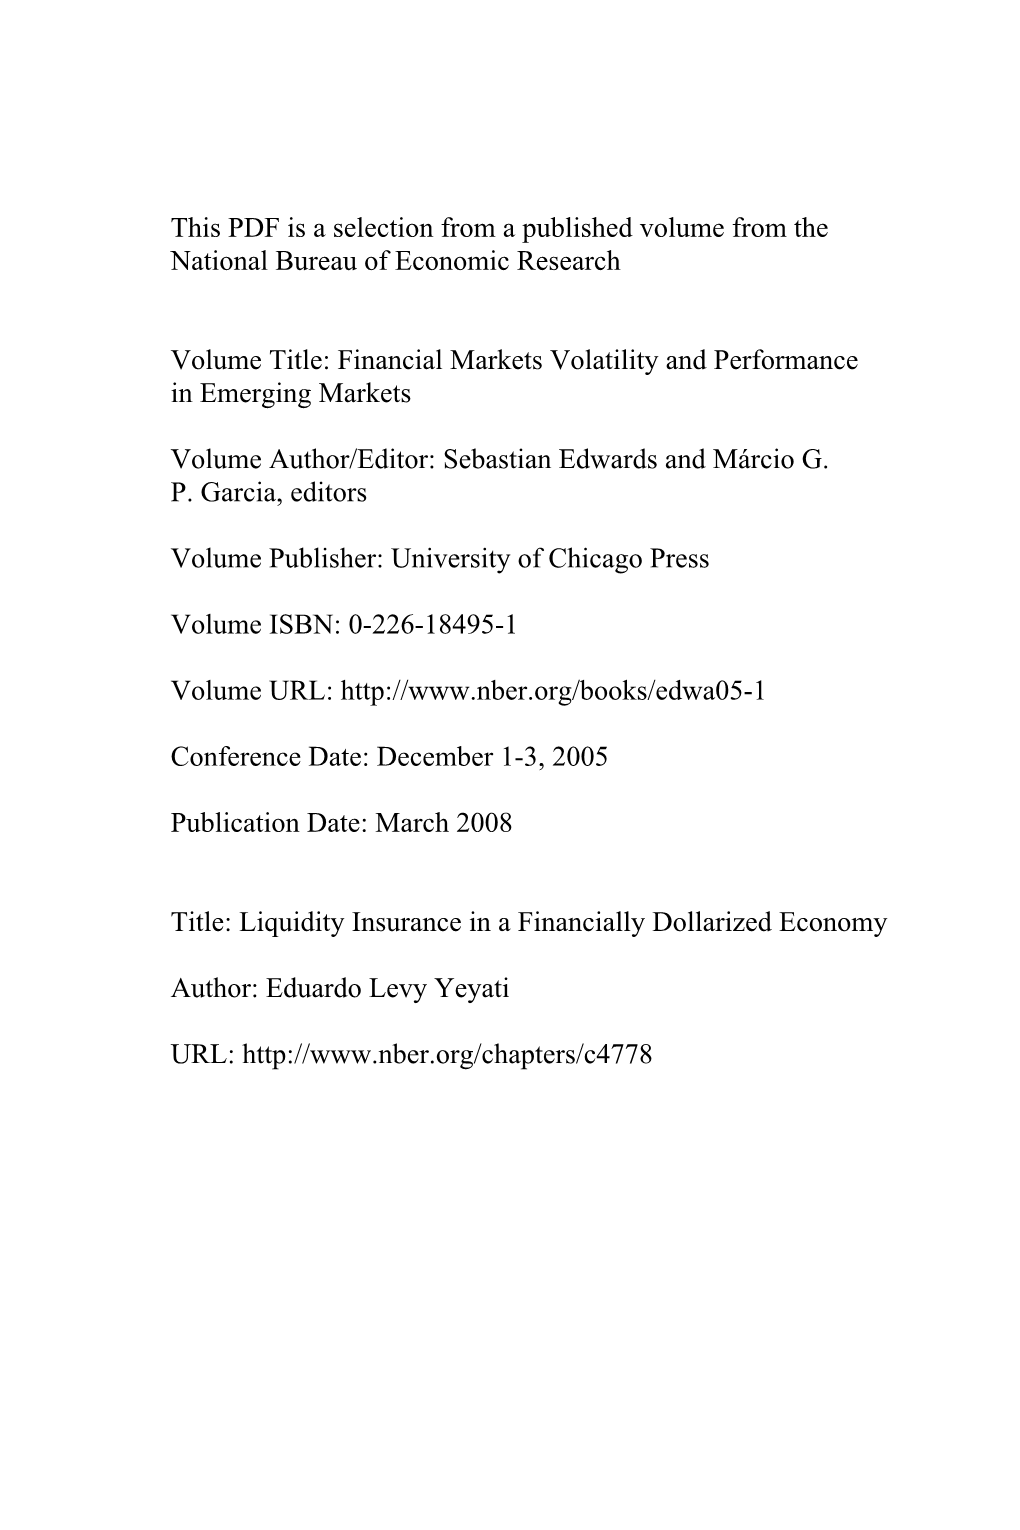 Liquidity Insurance in a Financially Dollarized Economy